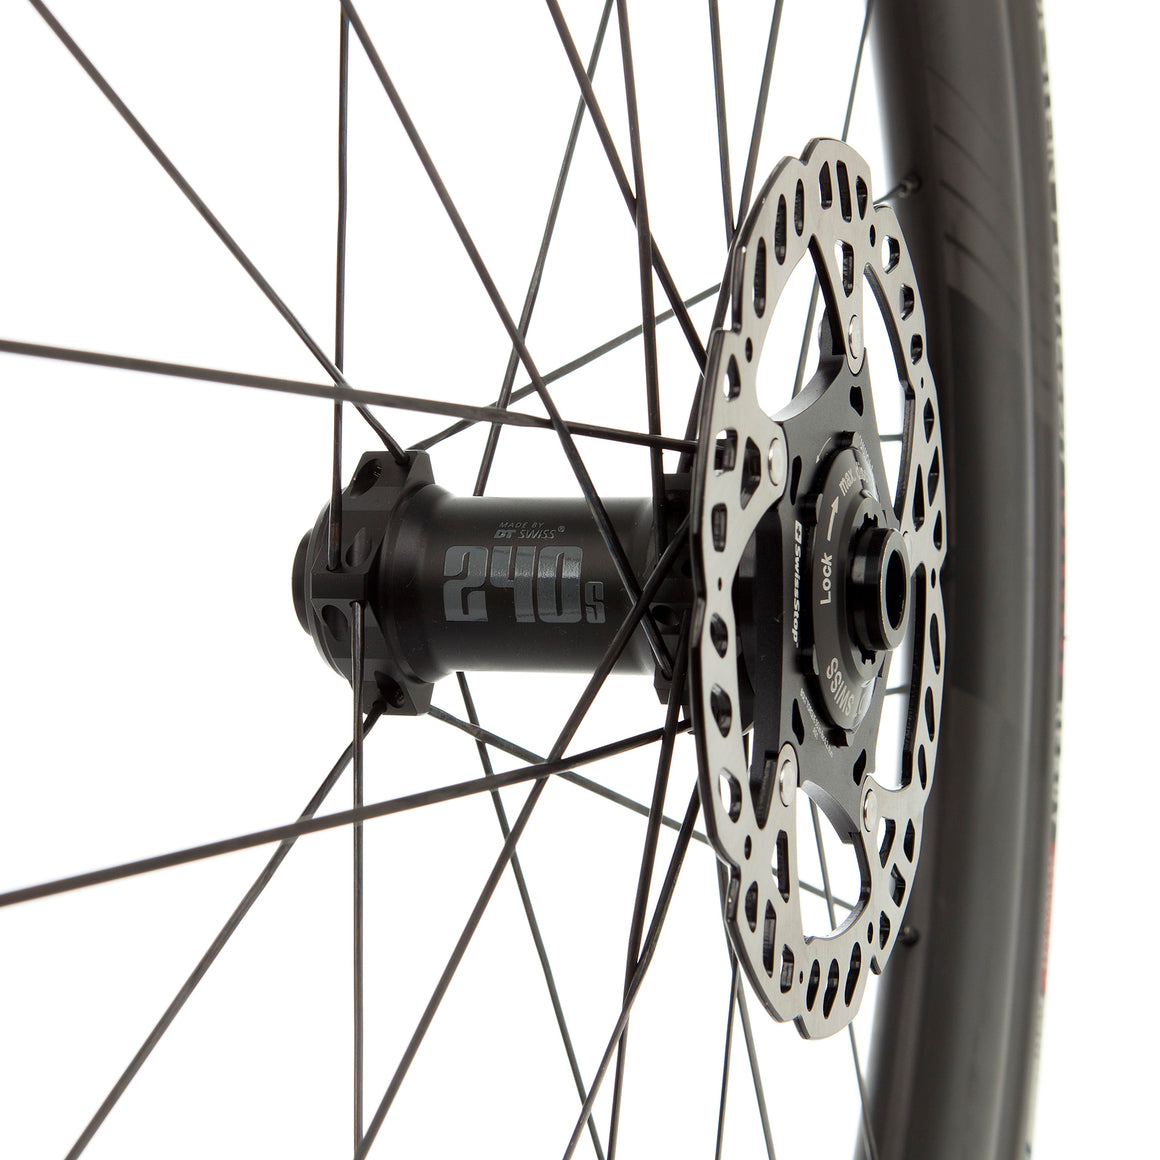 FFWD - F3D Full Carbon Clincher Wheel Set - Bike Wheels